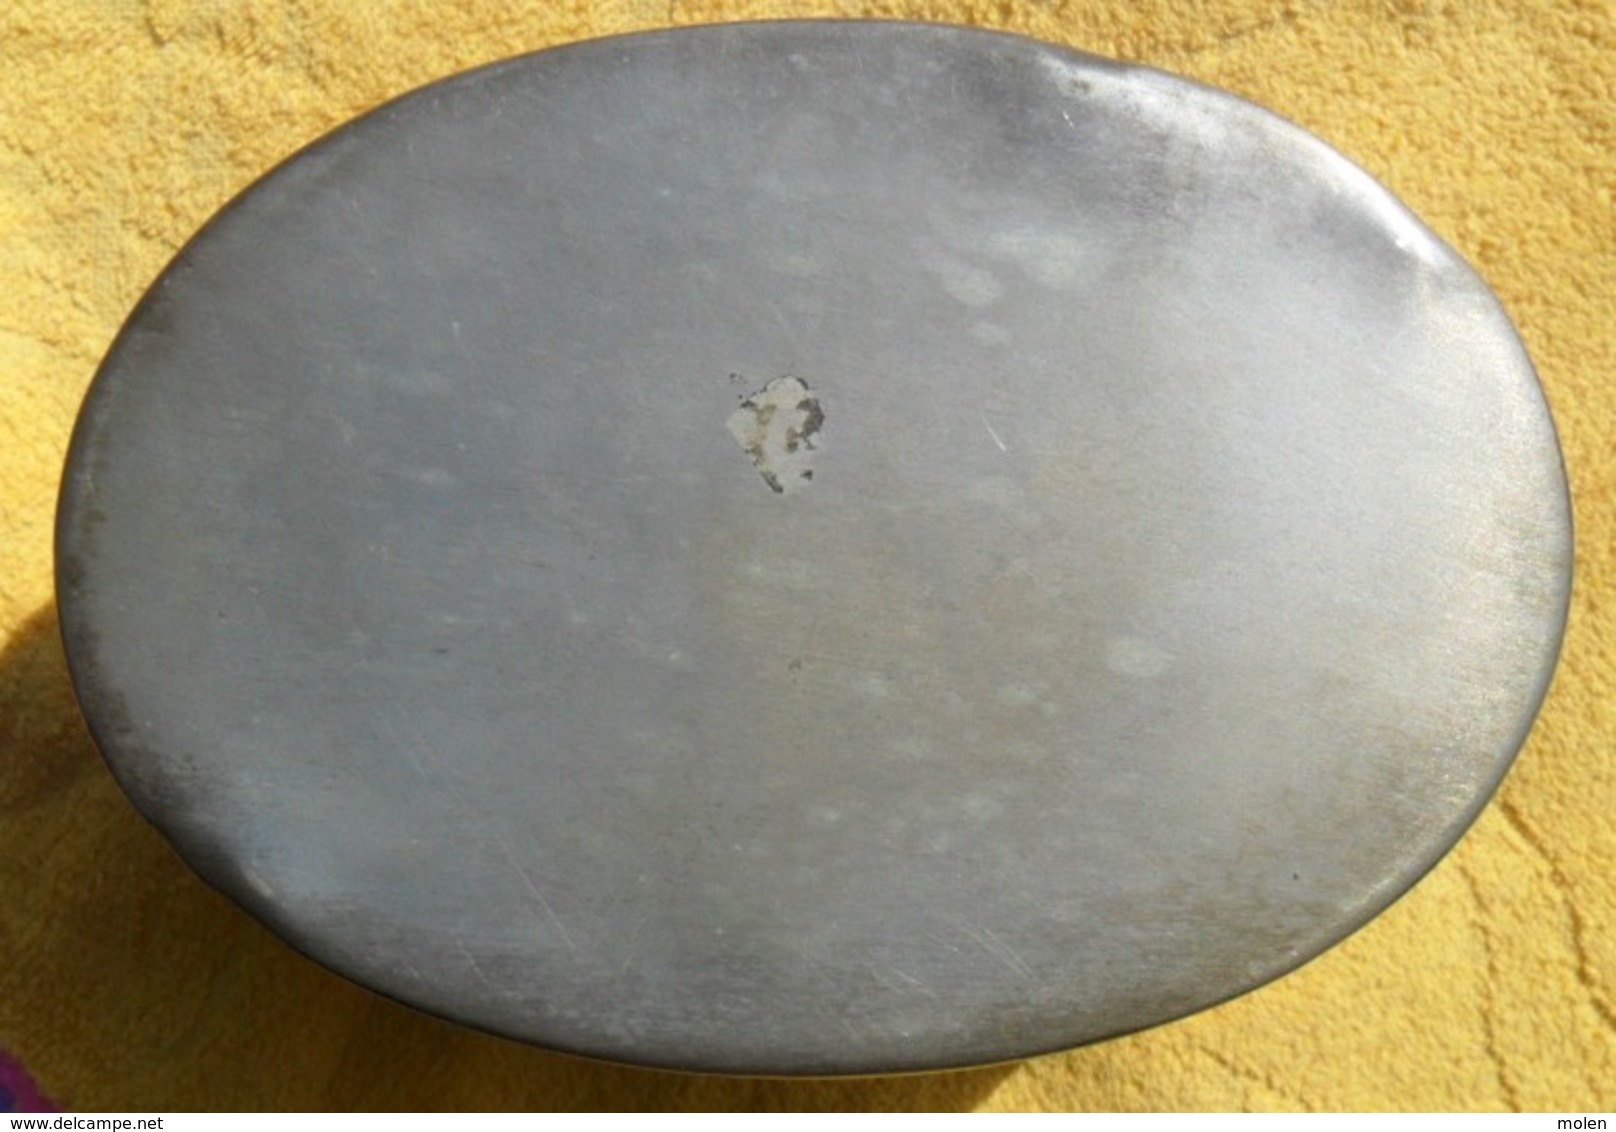 ANCIENNE BONBONNIERE en métal argenté ANTIEK METALEN SNOEPDOOS ANTIQUE OLD CANDY BOX bonbondoos doos metaal bonbon Z697